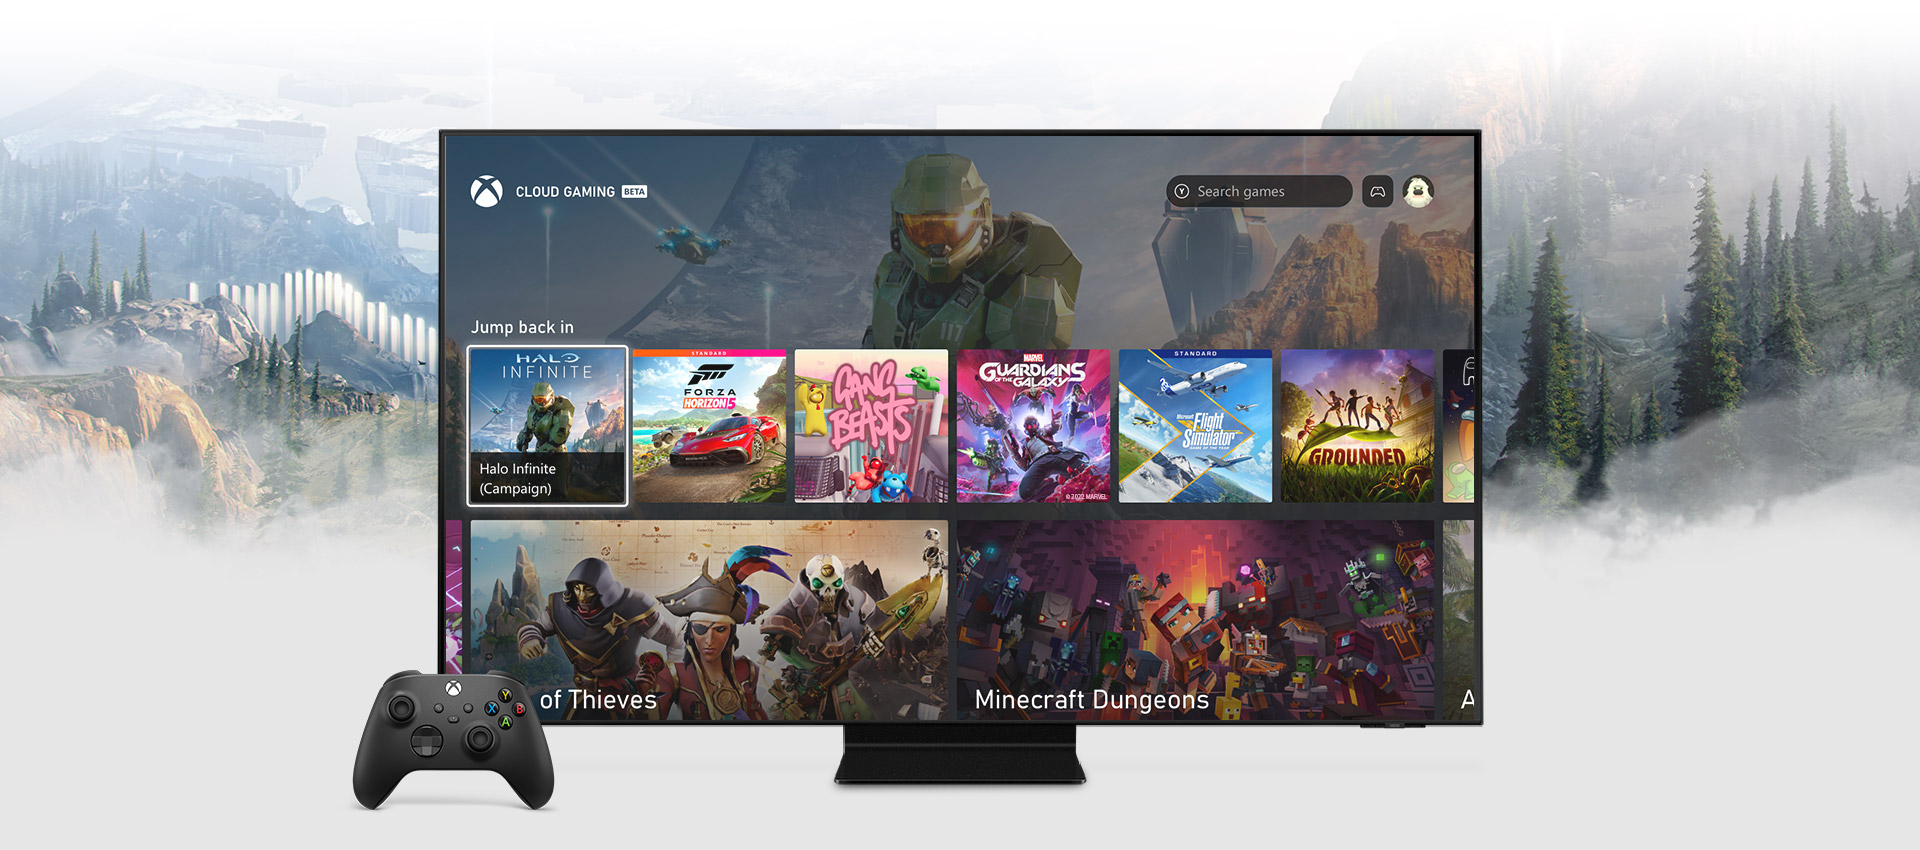 Domovská obrazovka aplikace Xbox na chytrém televizoru Samsung